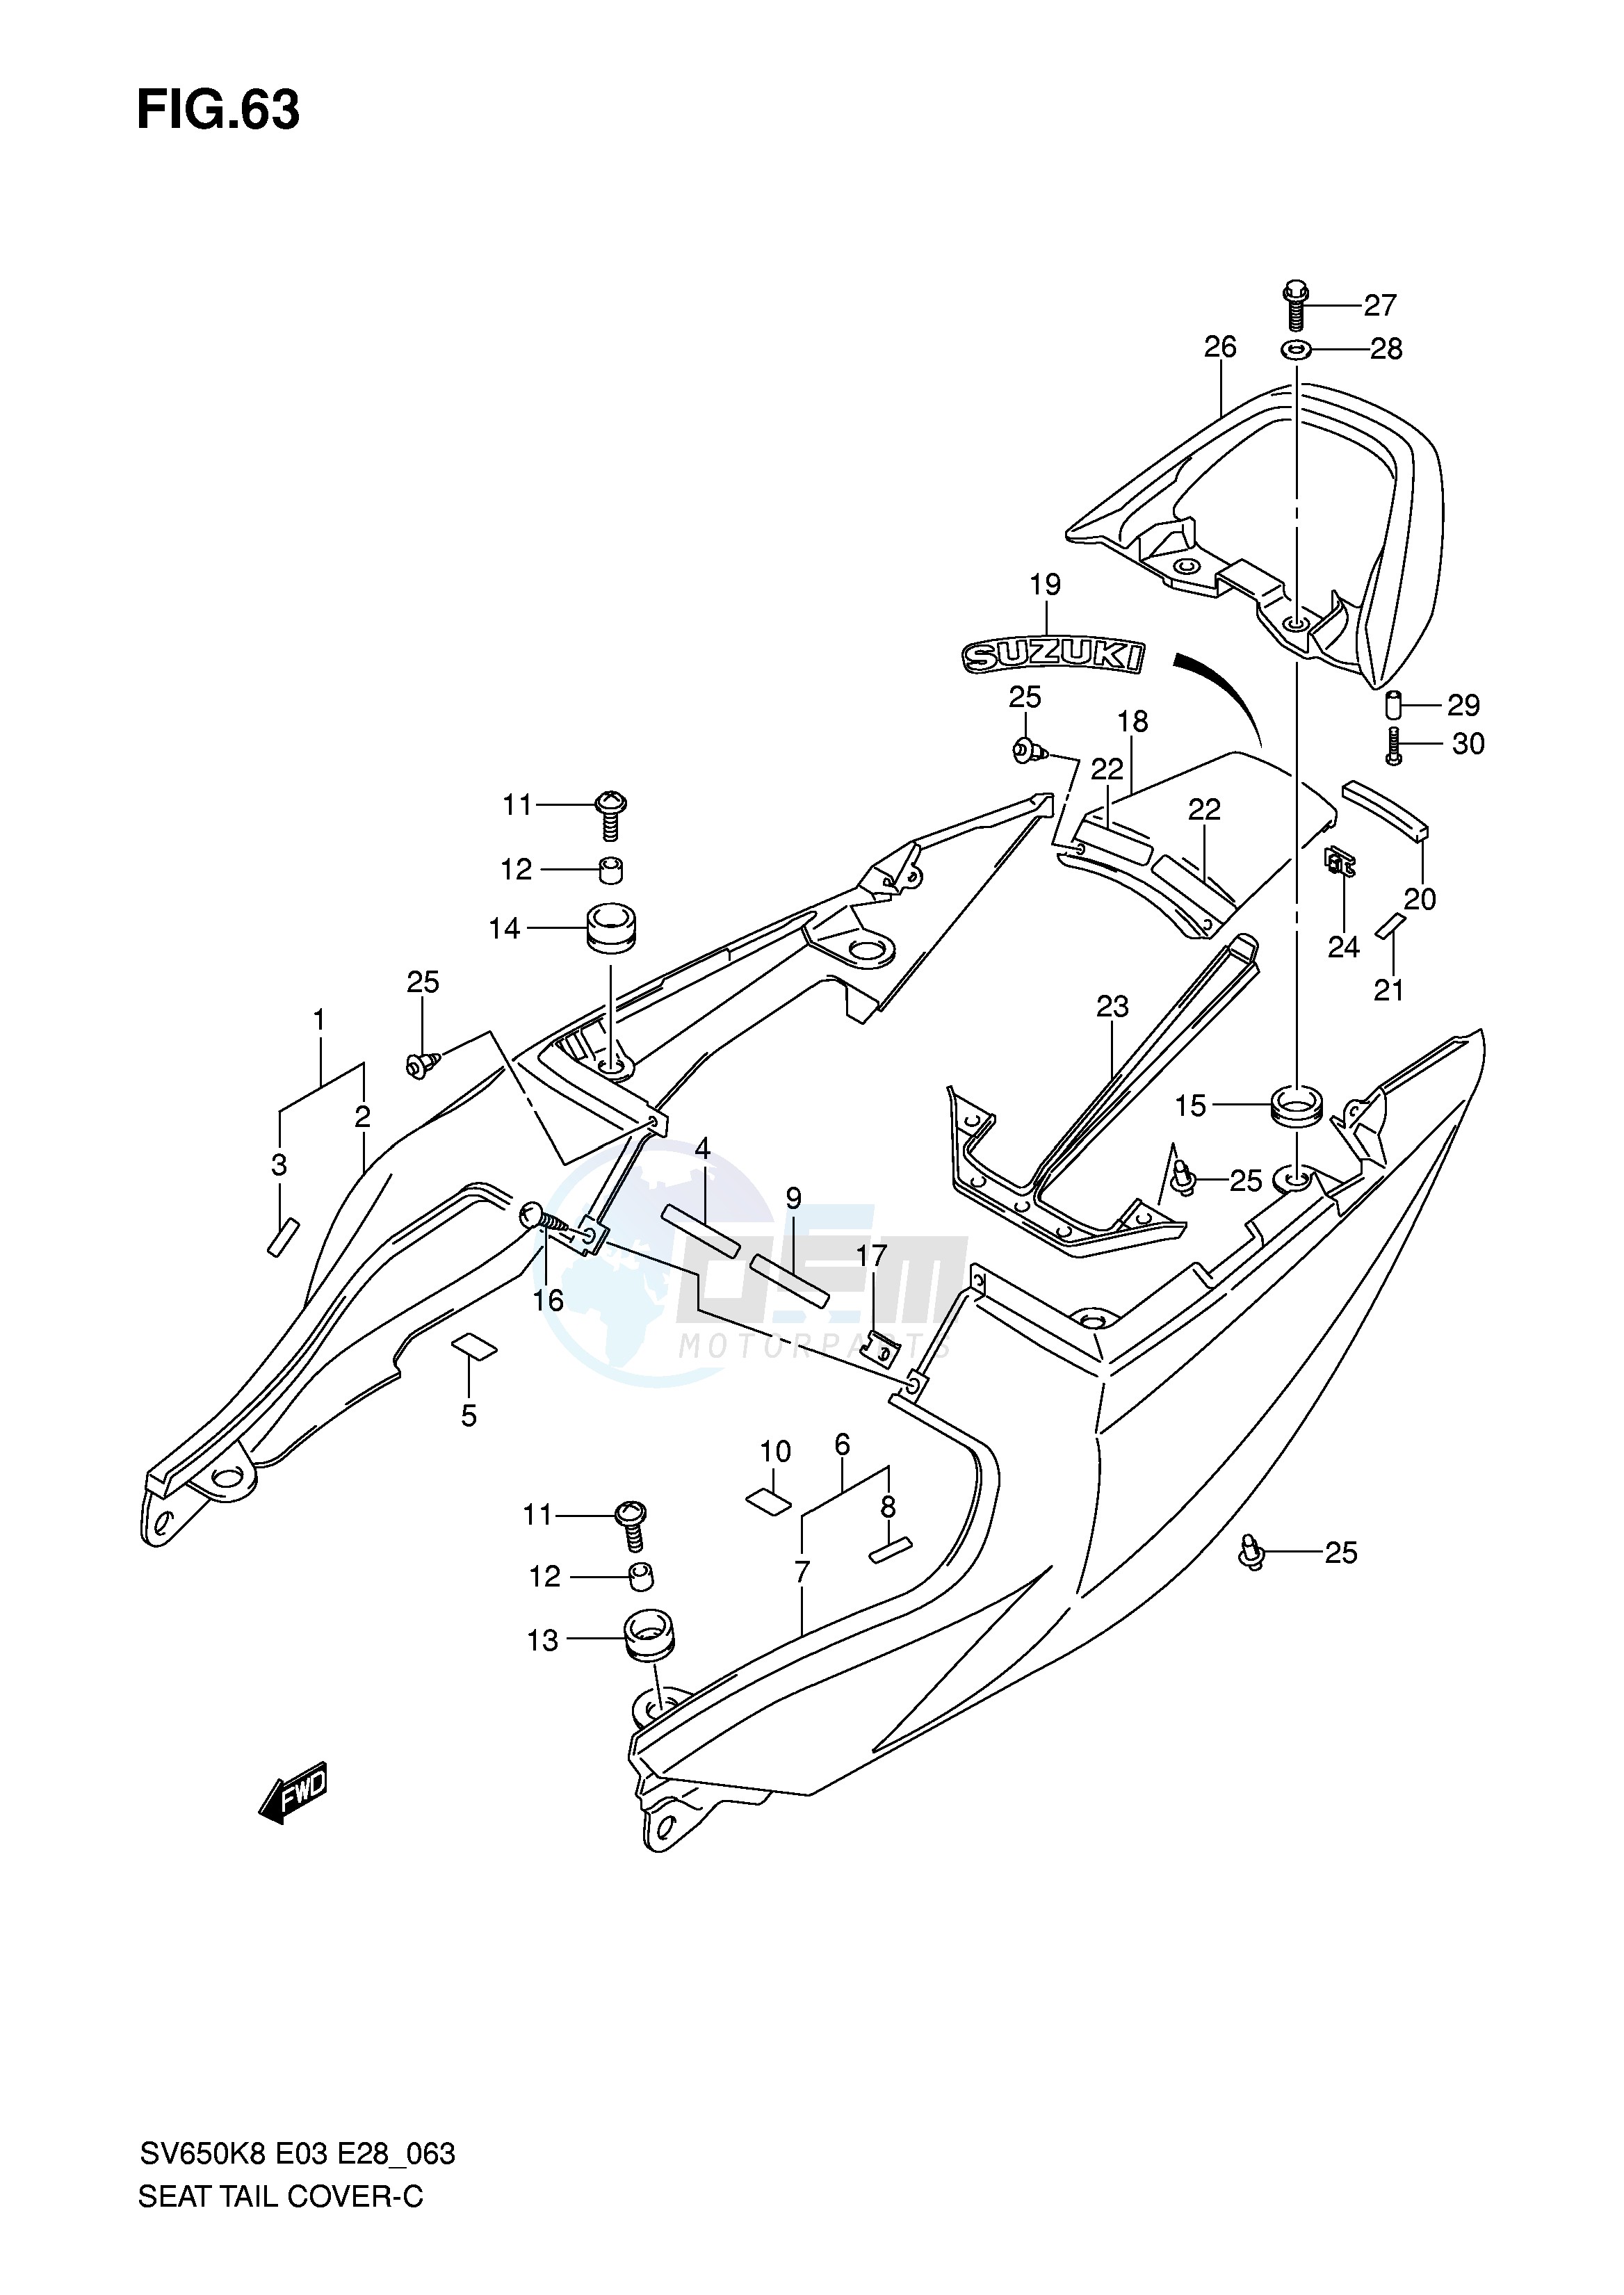 SEAT TAIL COVER (SV650SK8 SAK8) blueprint